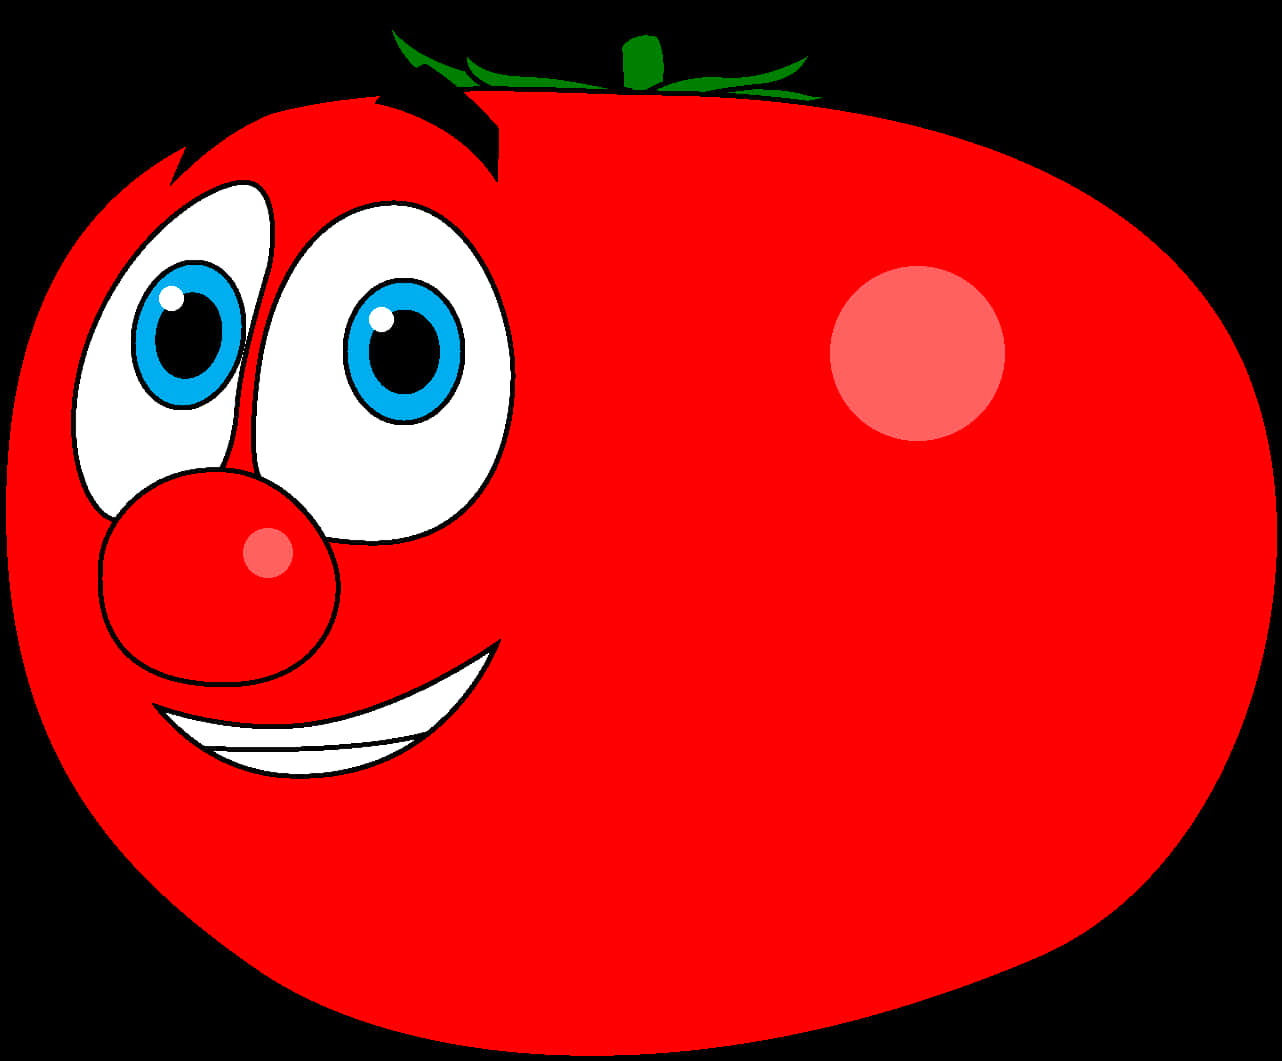 Smiling Cartoon Tomato PNG